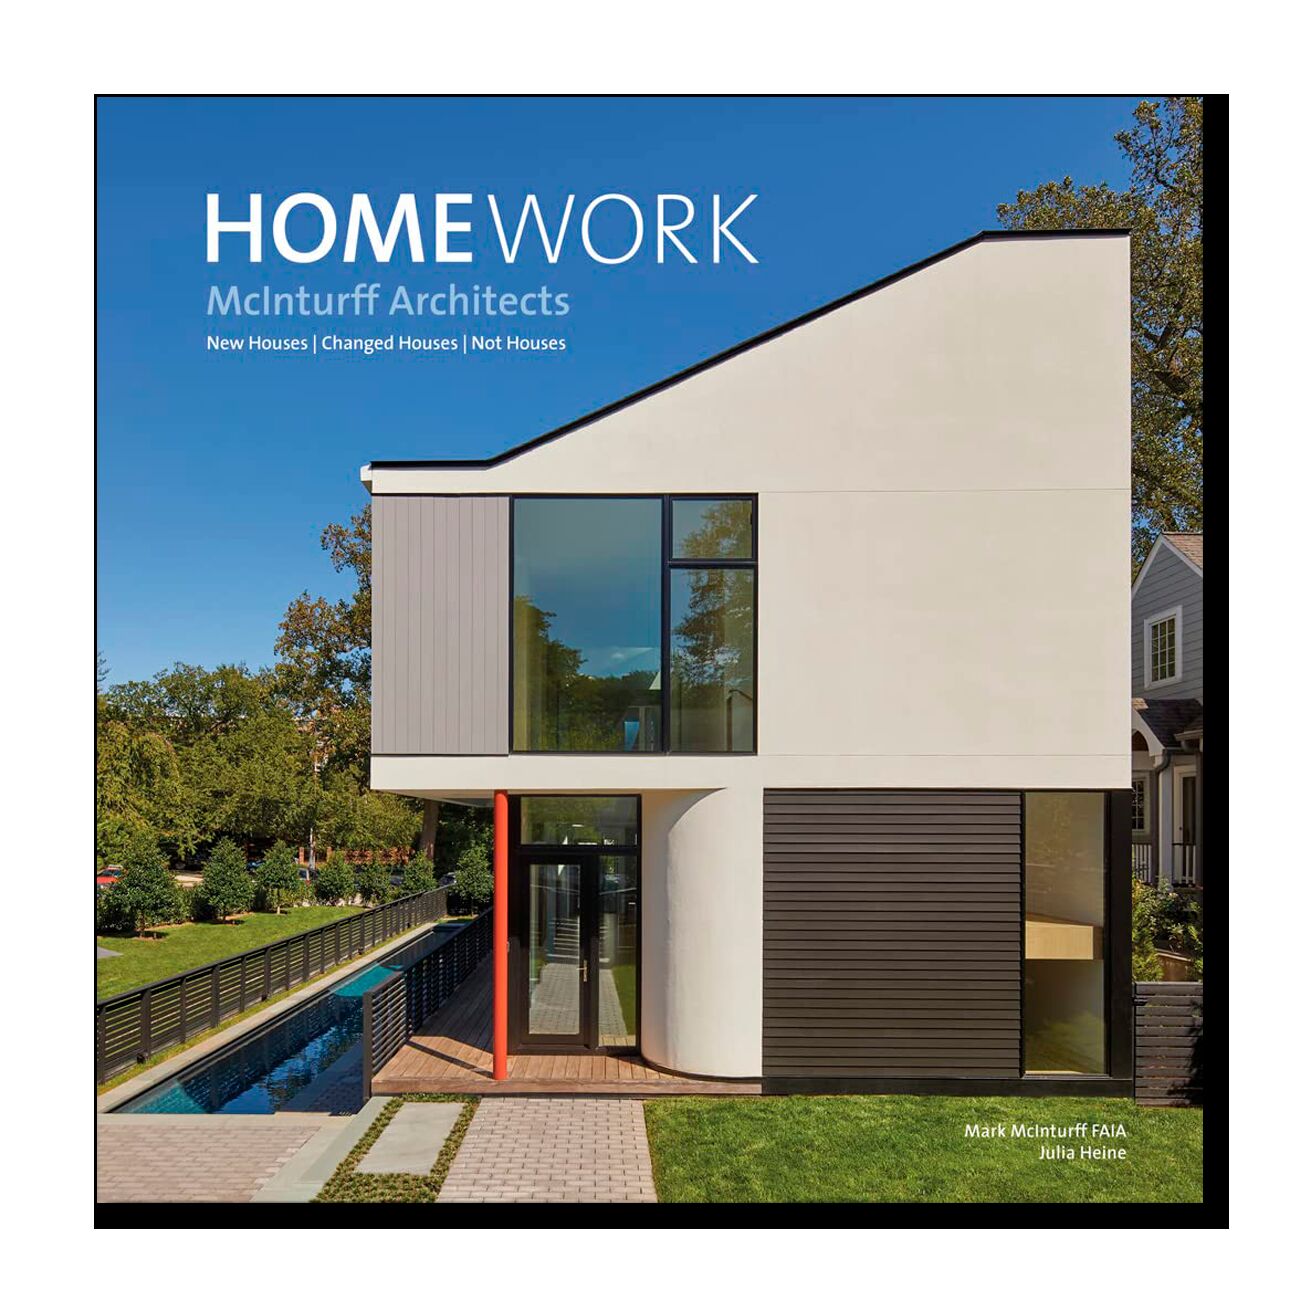 HomeWork: New Houses | Changed Houses